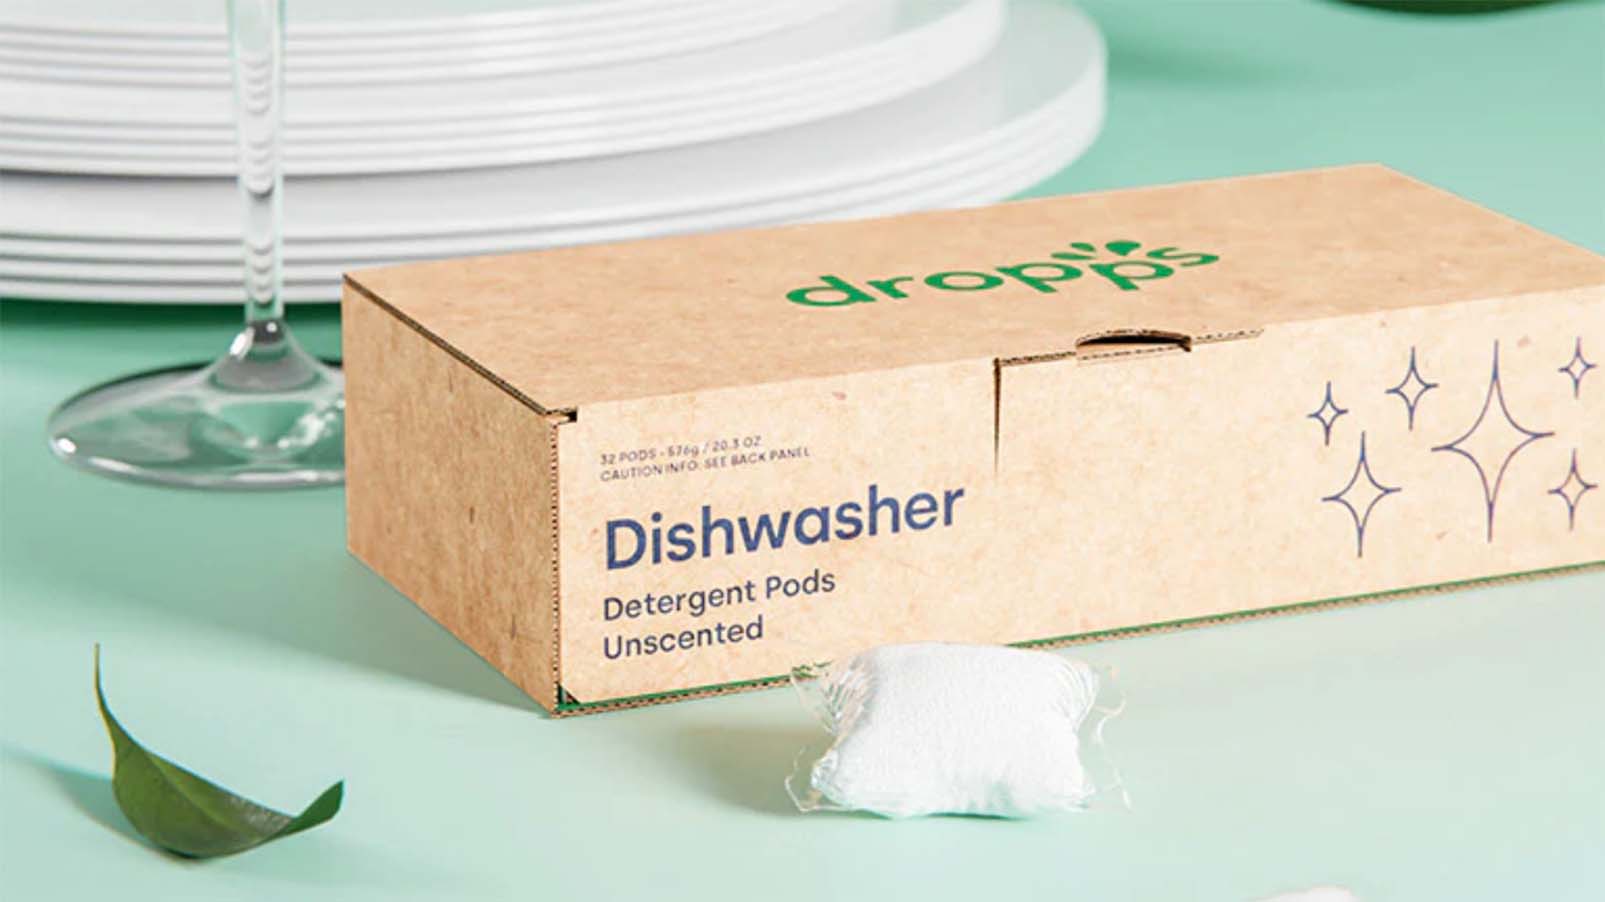 https://media.cnn.com/api/v1/images/stellar/prod/220816132902-sustainable-dish-washing-tips-essentials-dropps.jpg?c=original